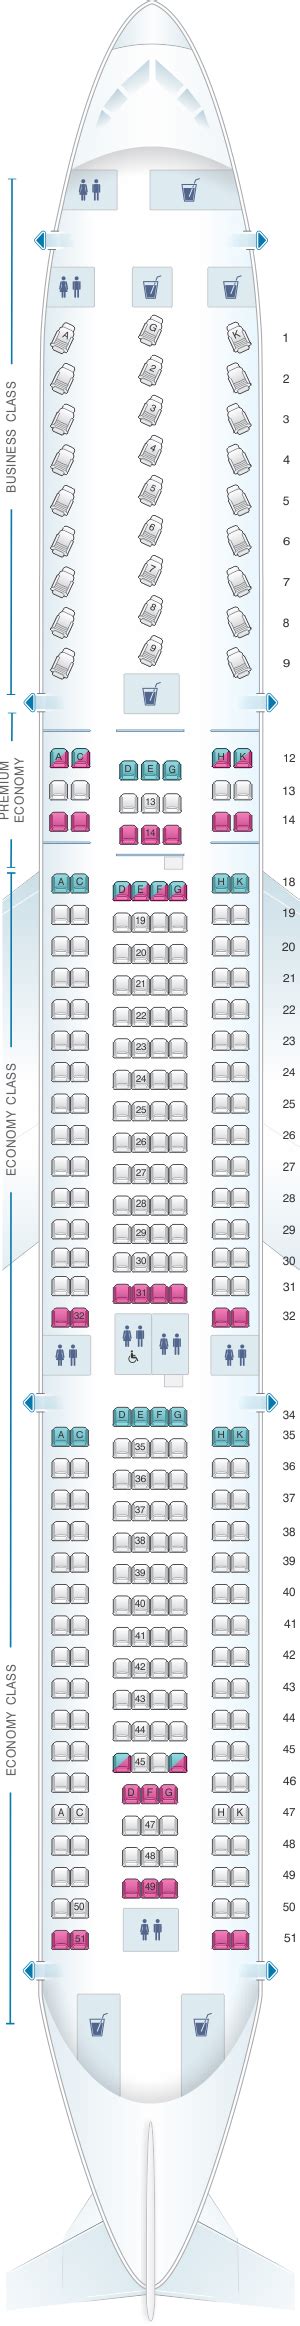 Air Canada Airbus A321 200 Seat Map